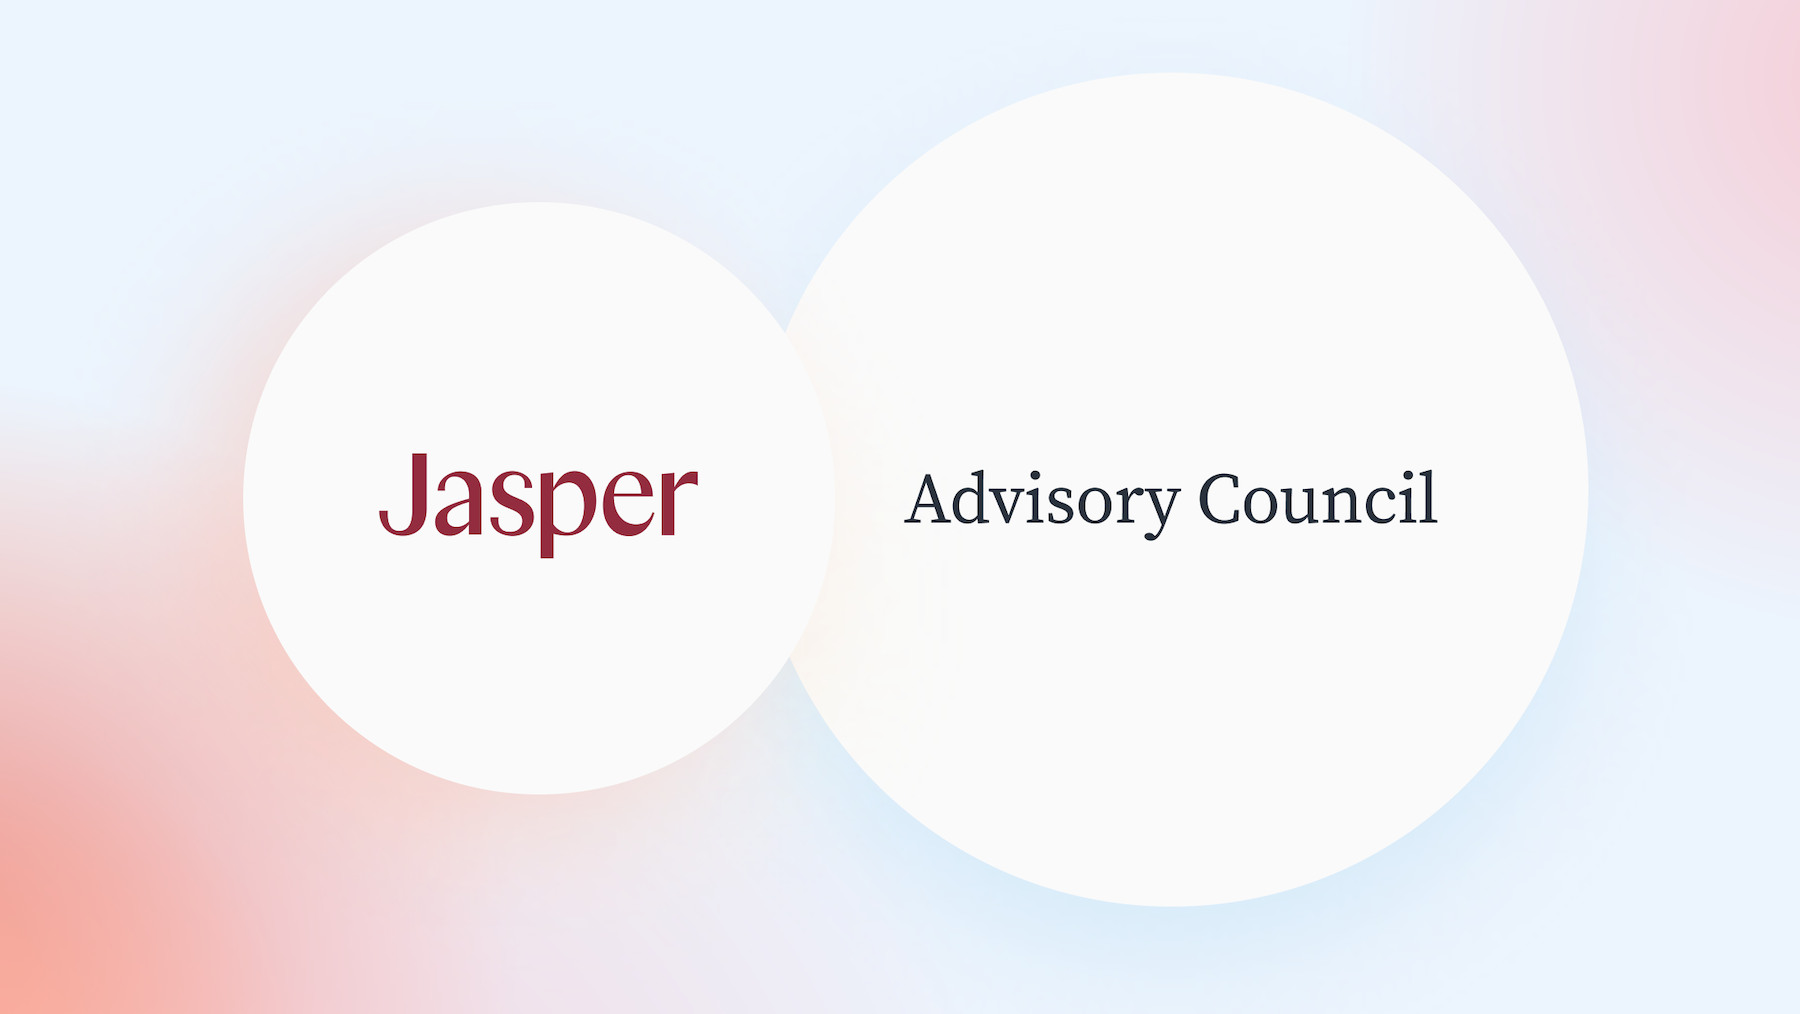 Jasper logo and Advisory Council logo in two white circles